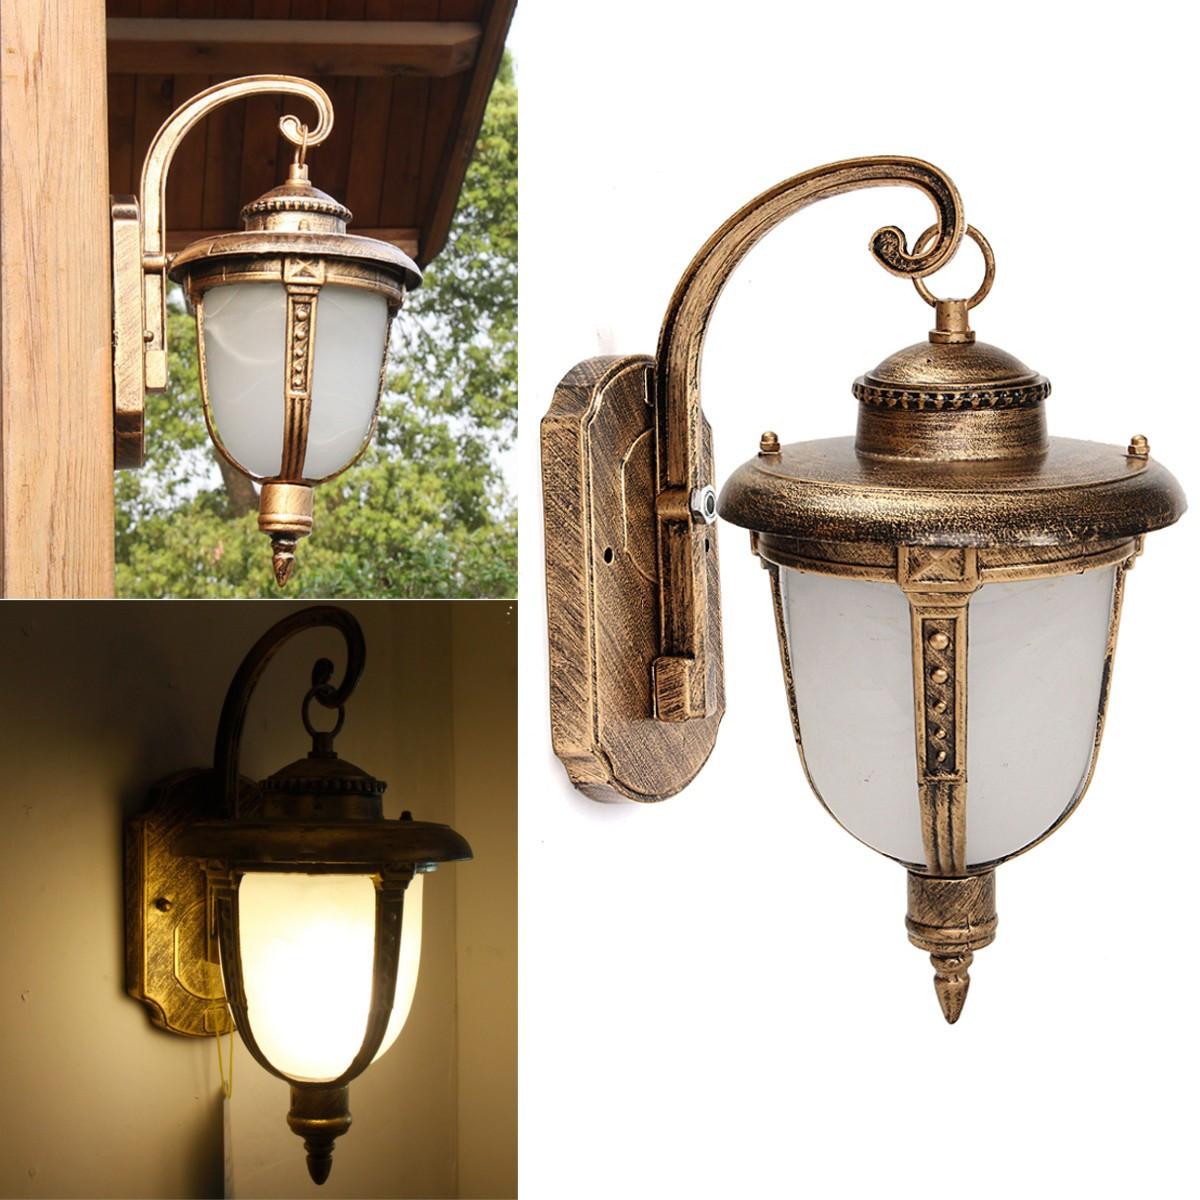 Best ideas about Outdoor Light Fixture
. Save or Pin Outdoor Porch Lantern Vintage Wall Light Fixture Aluminum Now.